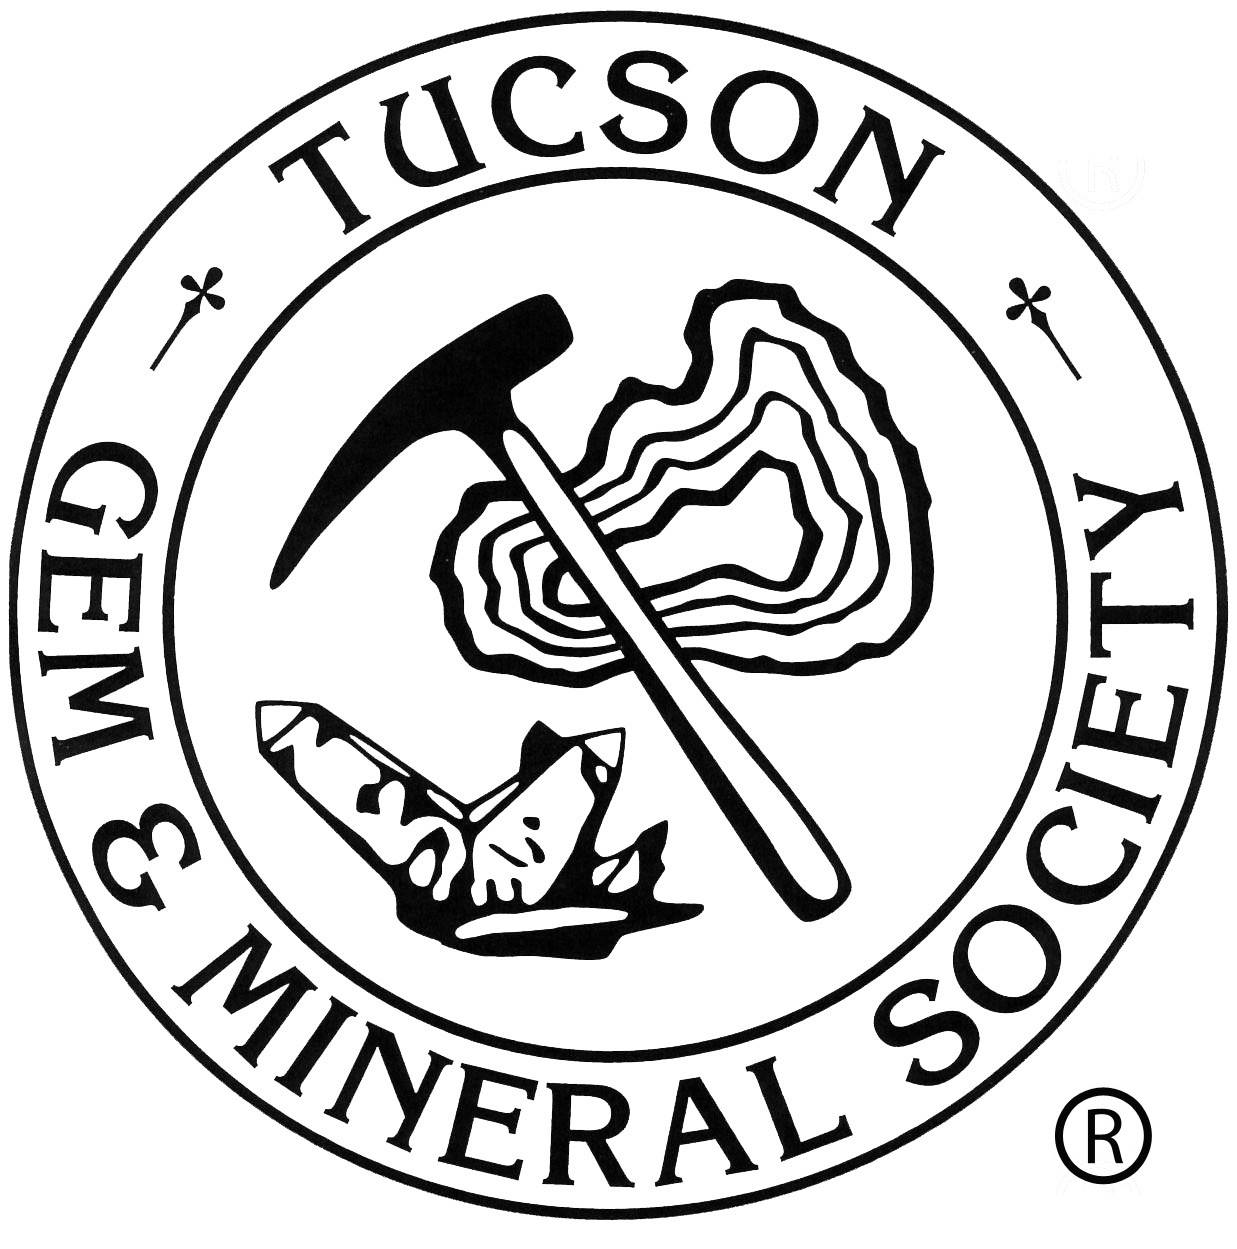 Show — Tucson Gem & Mineral Society